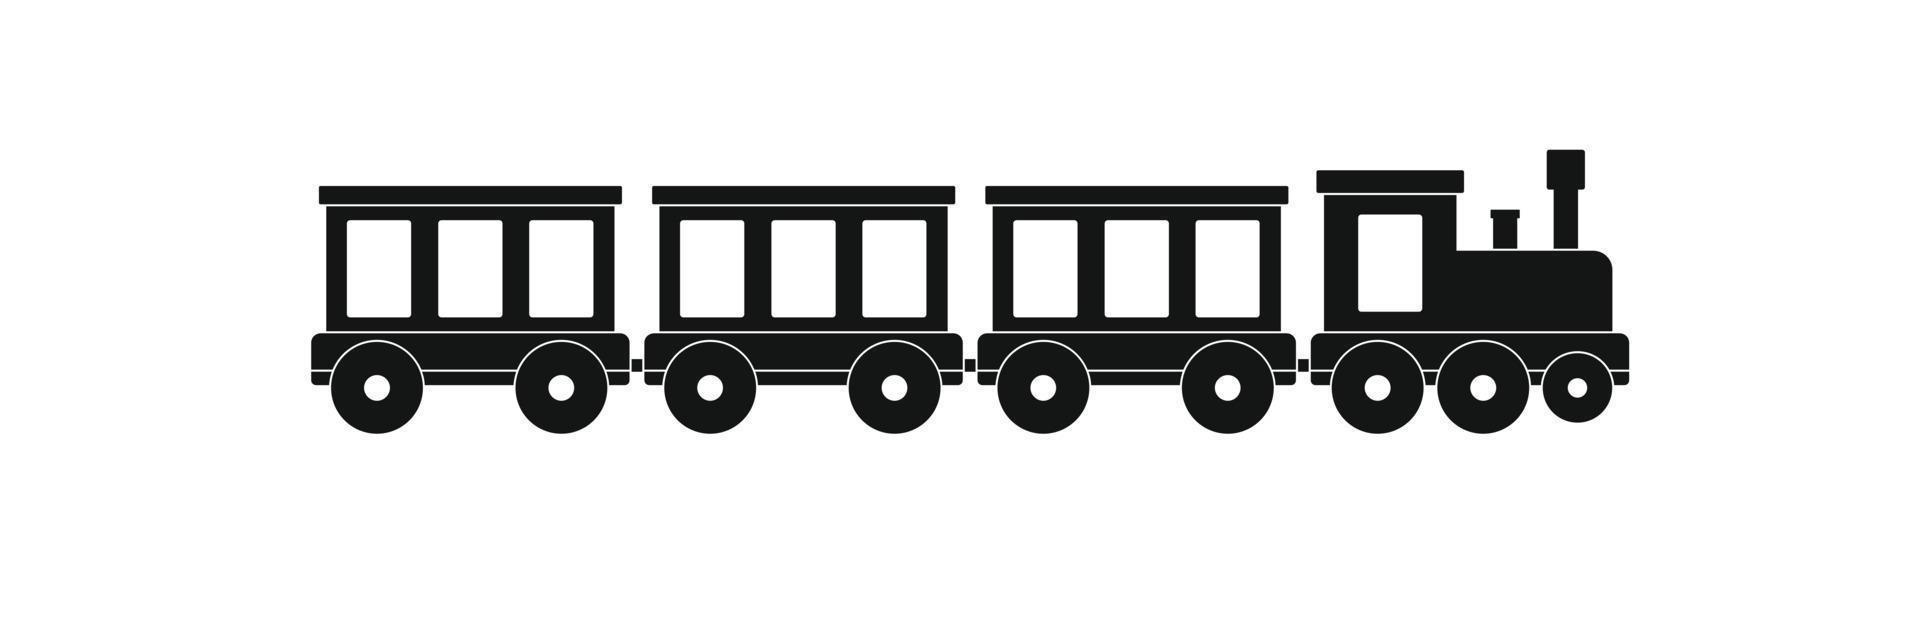 Passenger train icon, simple style. vector